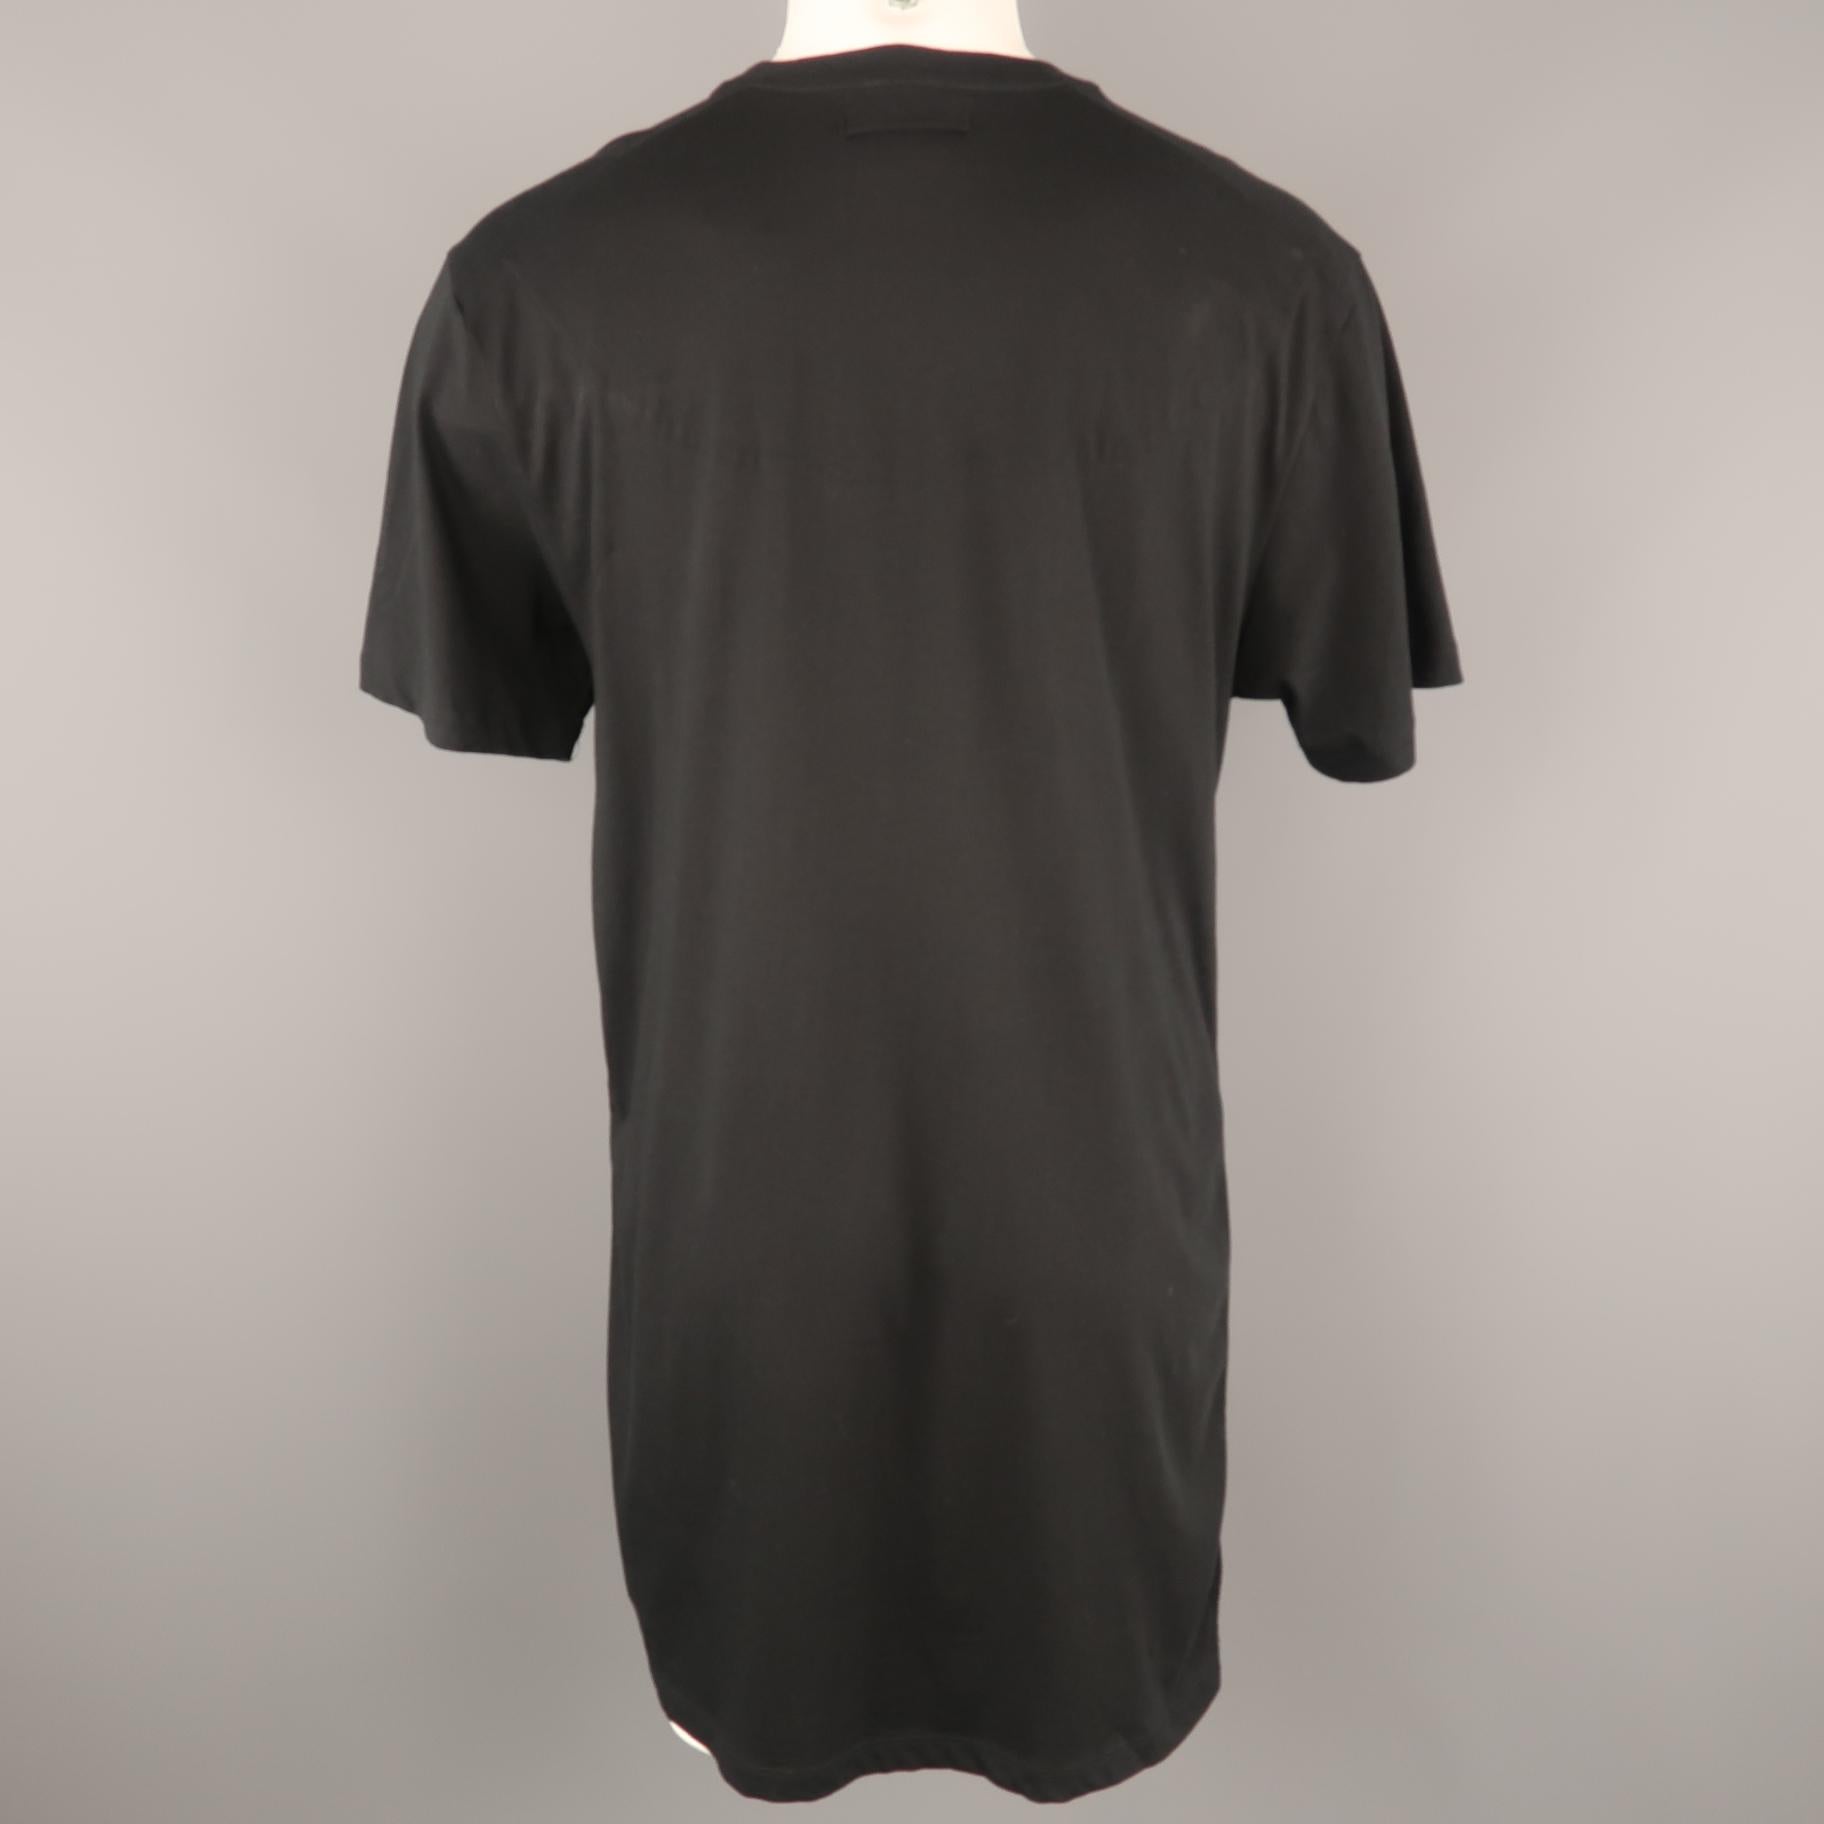 GAULTIER2 by JEAN PAUL GAULTIER Size XS Black Cotton Crew-Neck Slit Side T-shirt 1